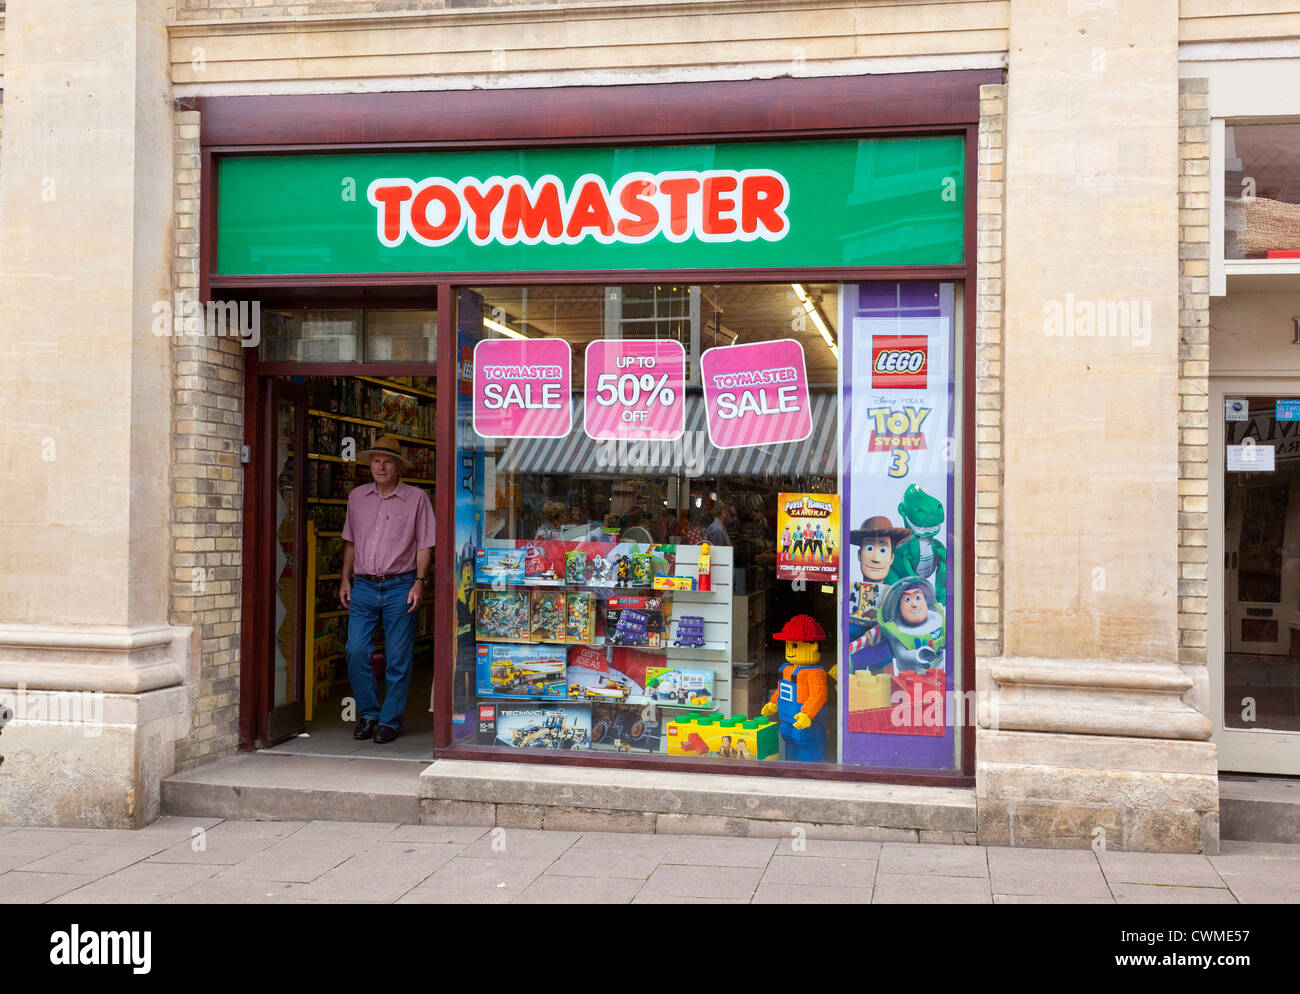 toymaster sale